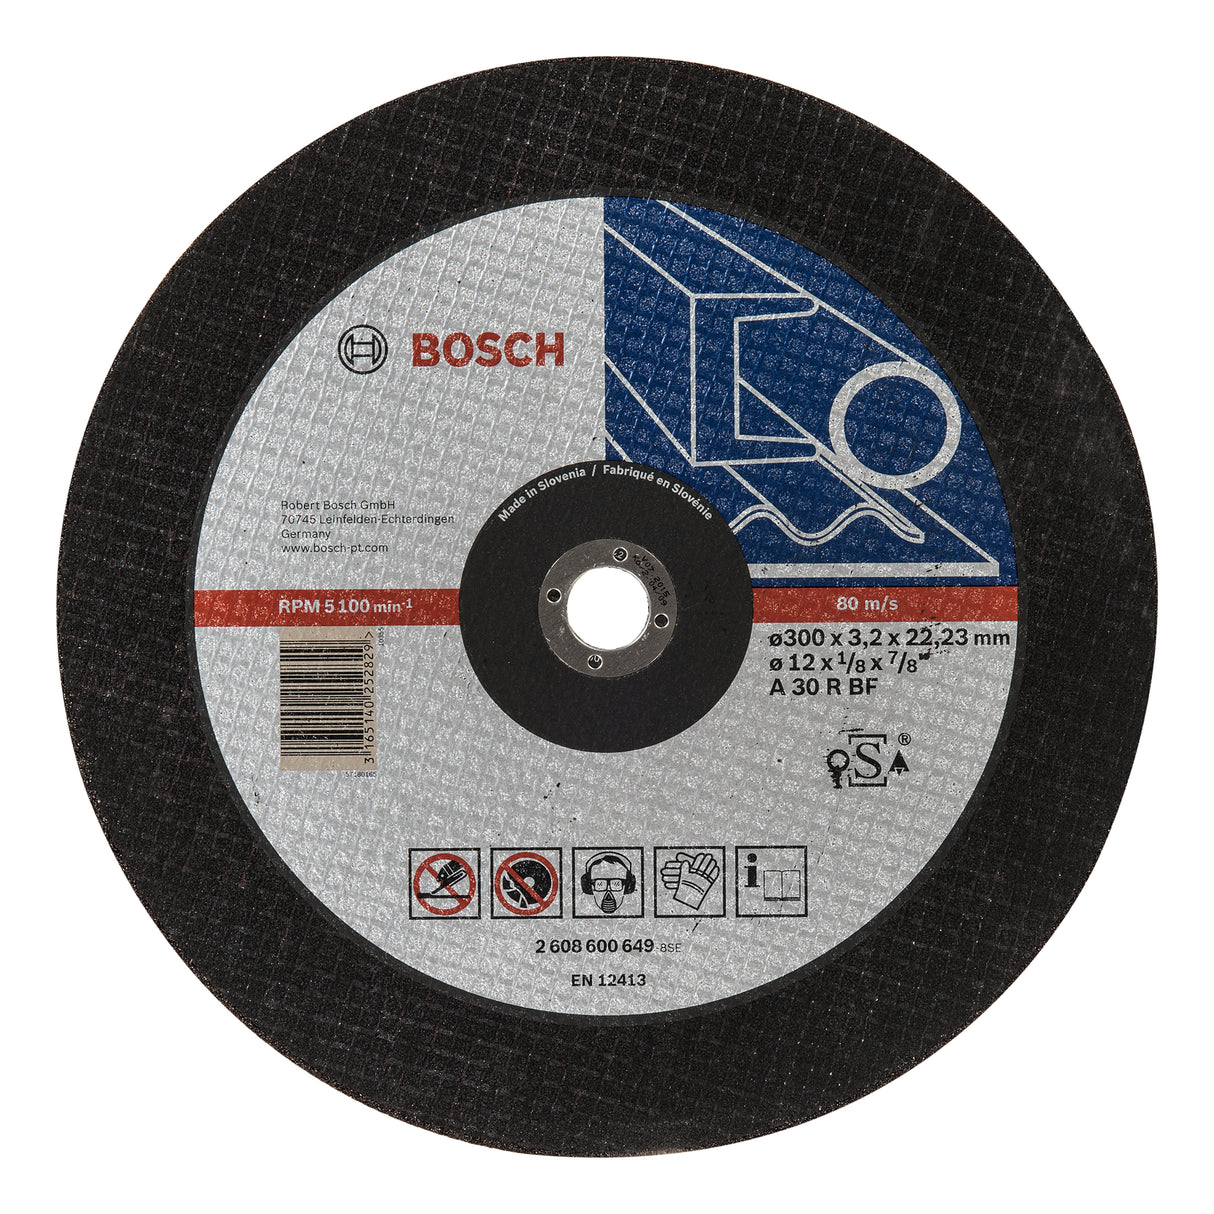 Bosch Professional Expert Metal Straight Cutting Disc A 30 R BF - 300mm x 3.2mm